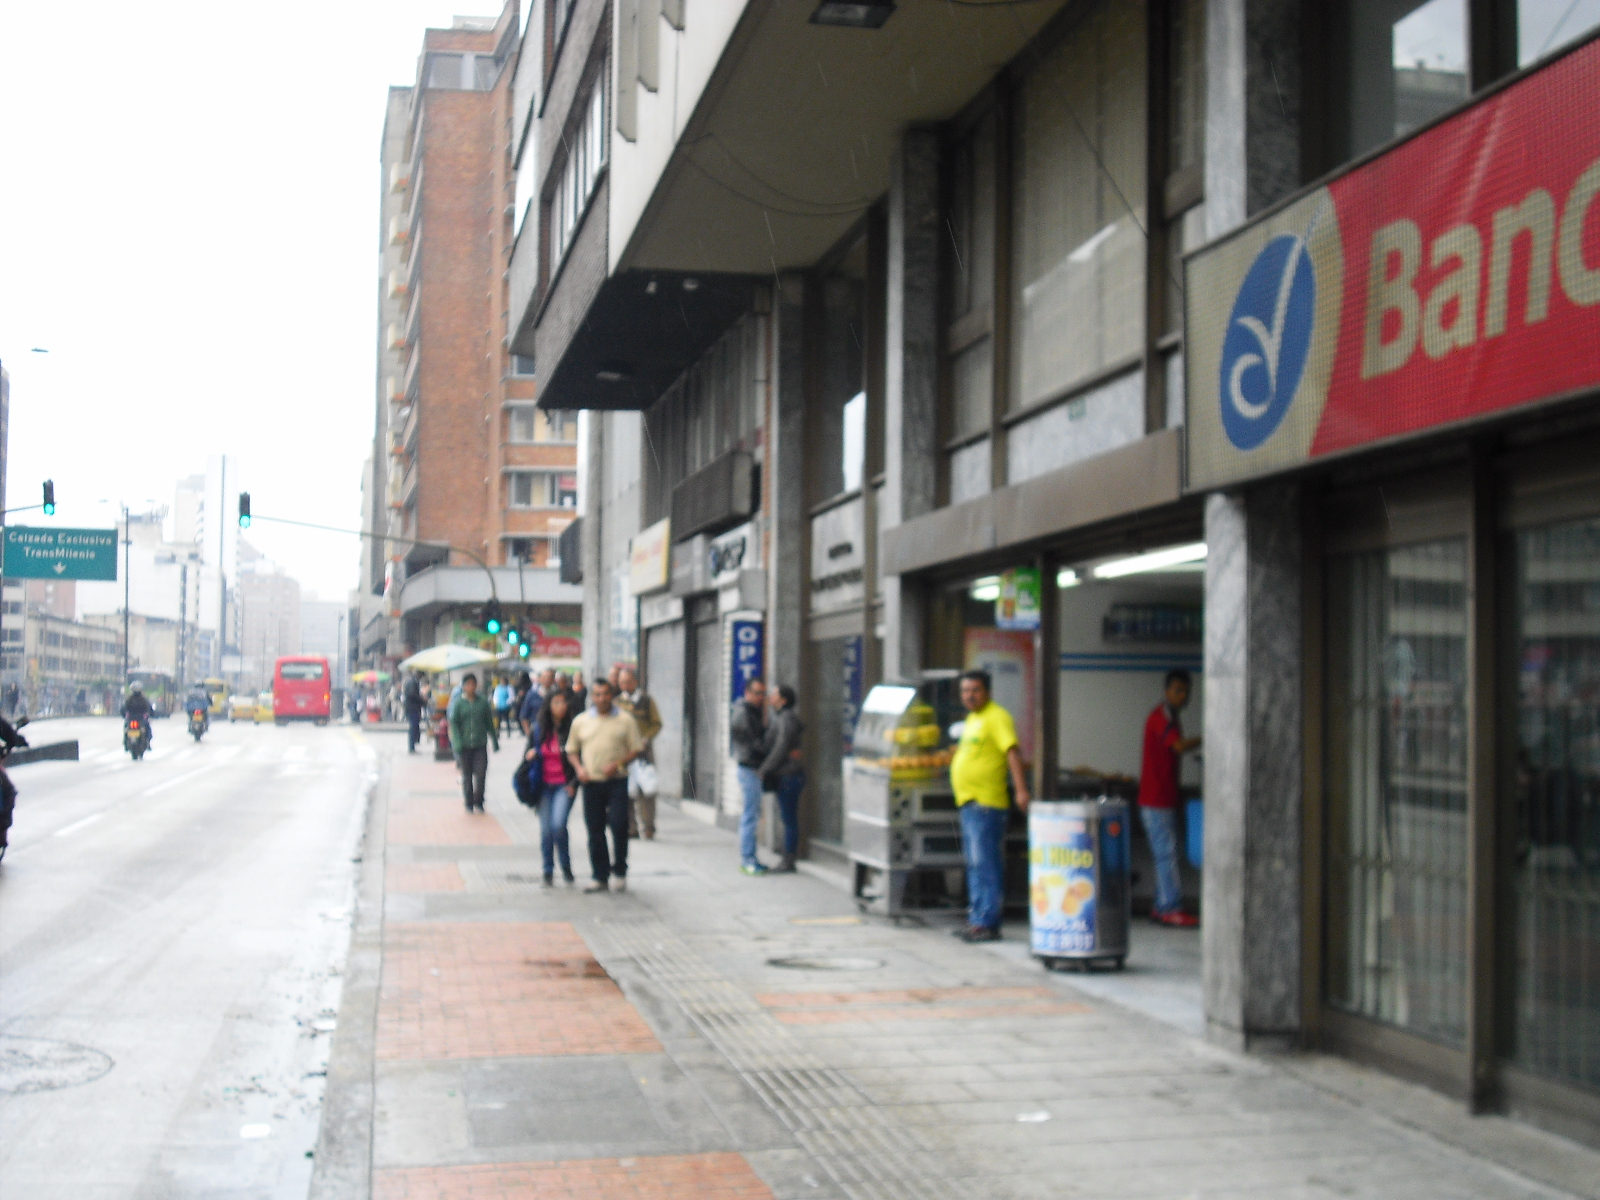 Tienda bar Bogotá, Carrera 10 #18-30